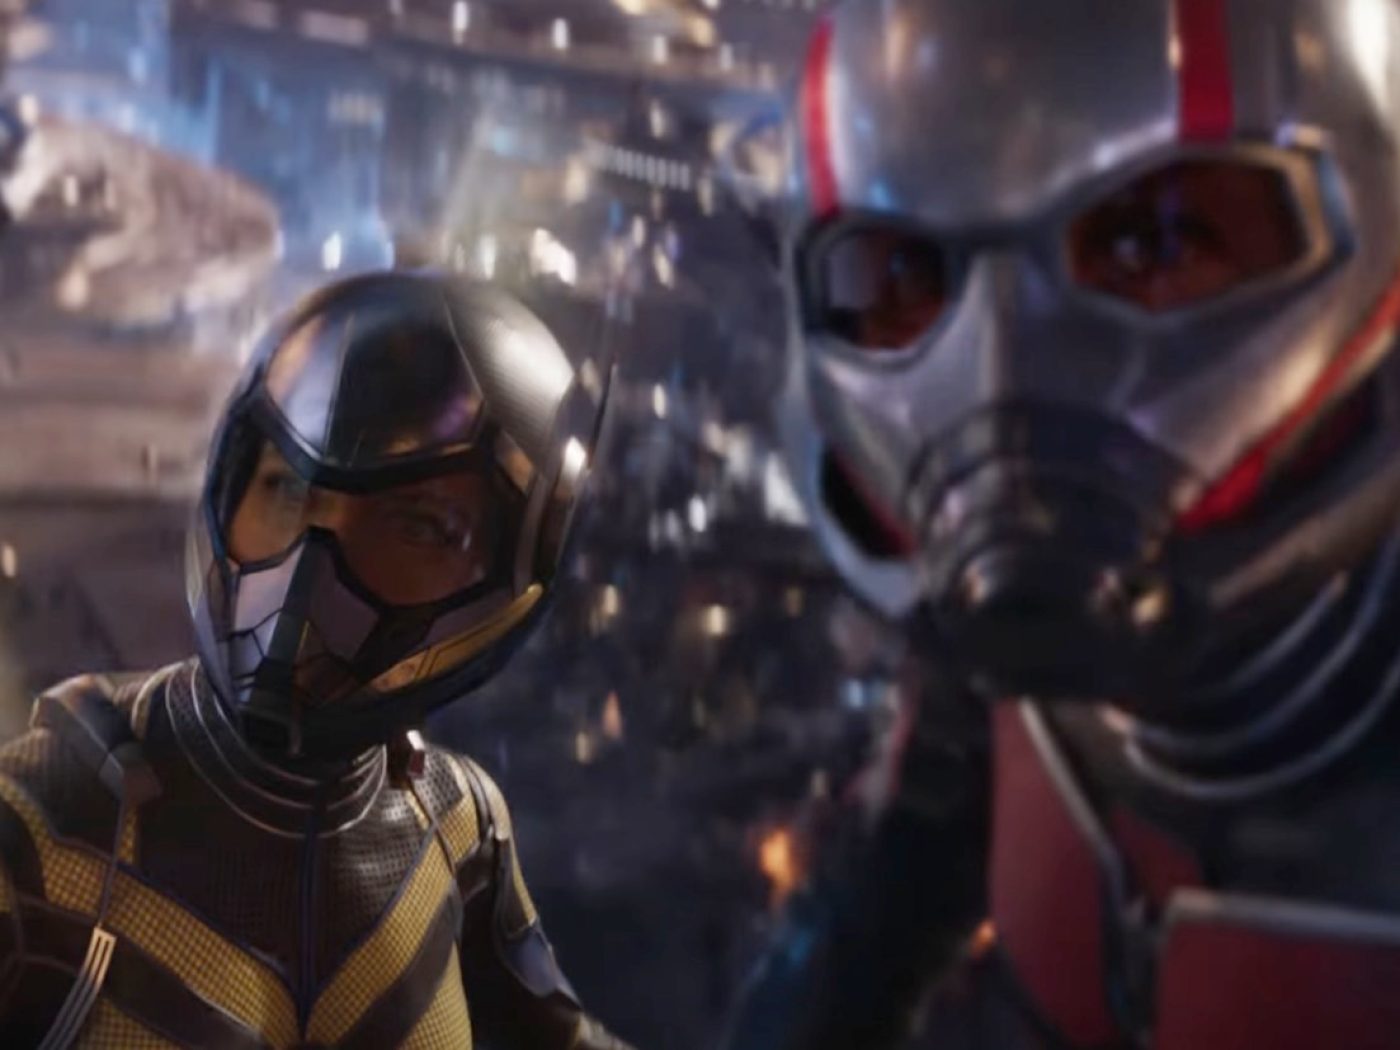 Last-minute Quantumania leak spoils how Ant-Man 3 ends